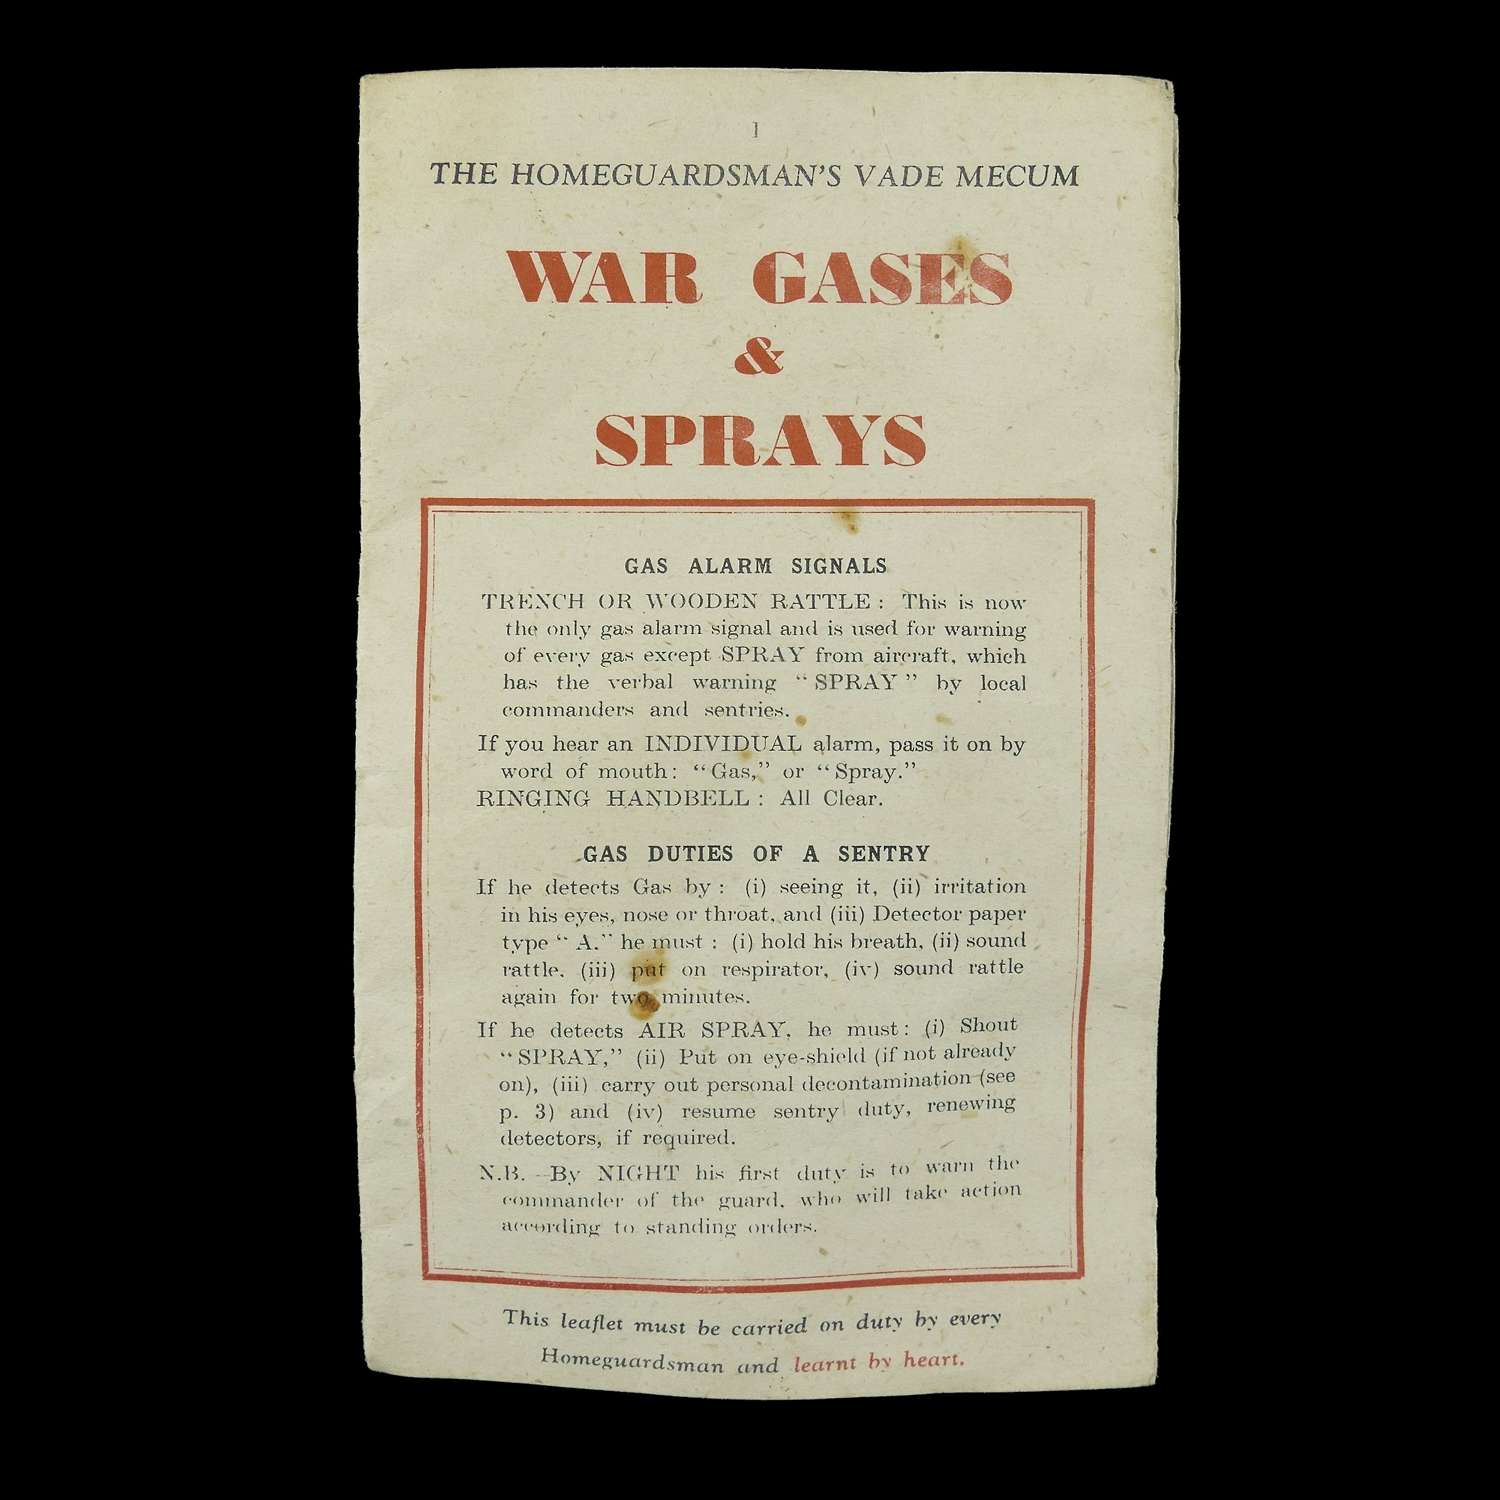 The Homeguardsman's Made Mecum - War Gases & Sprays